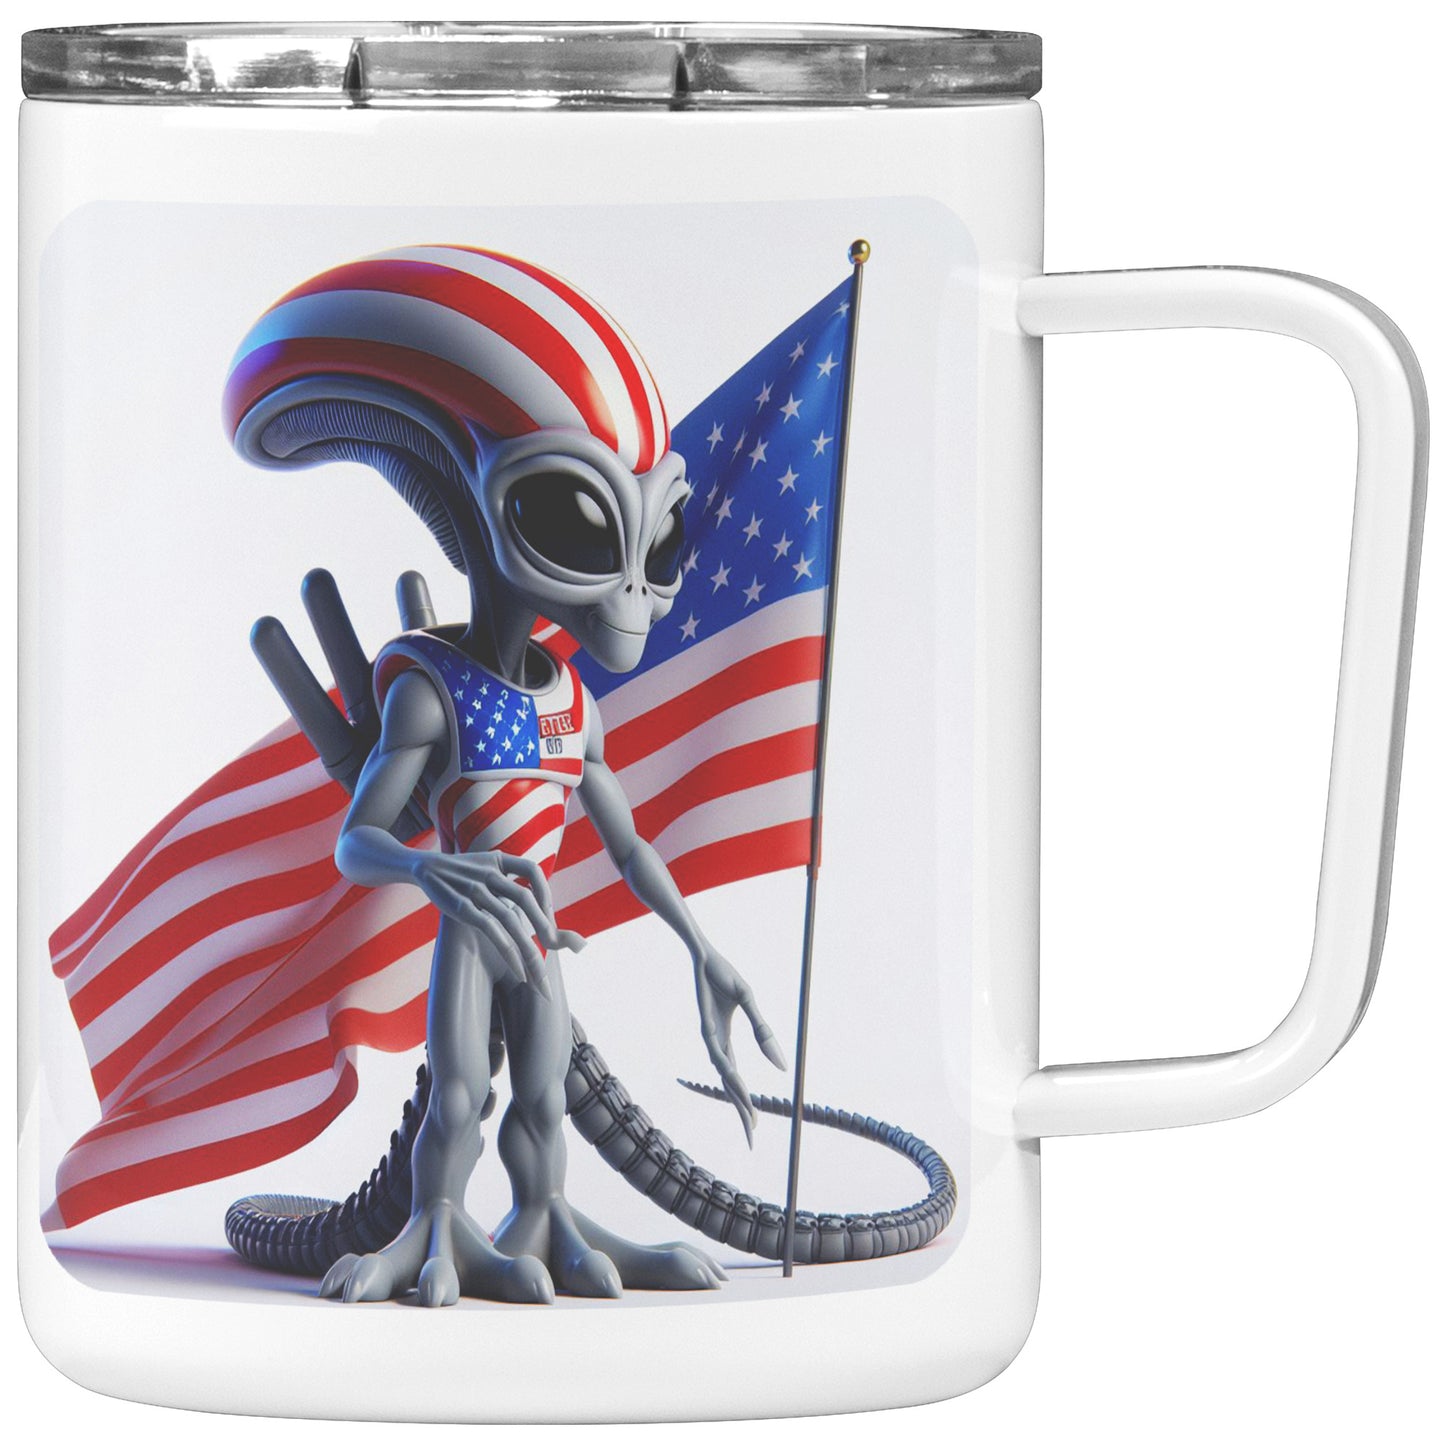 Nebulon the Grey Alien - Insulated Coffee Mug #26